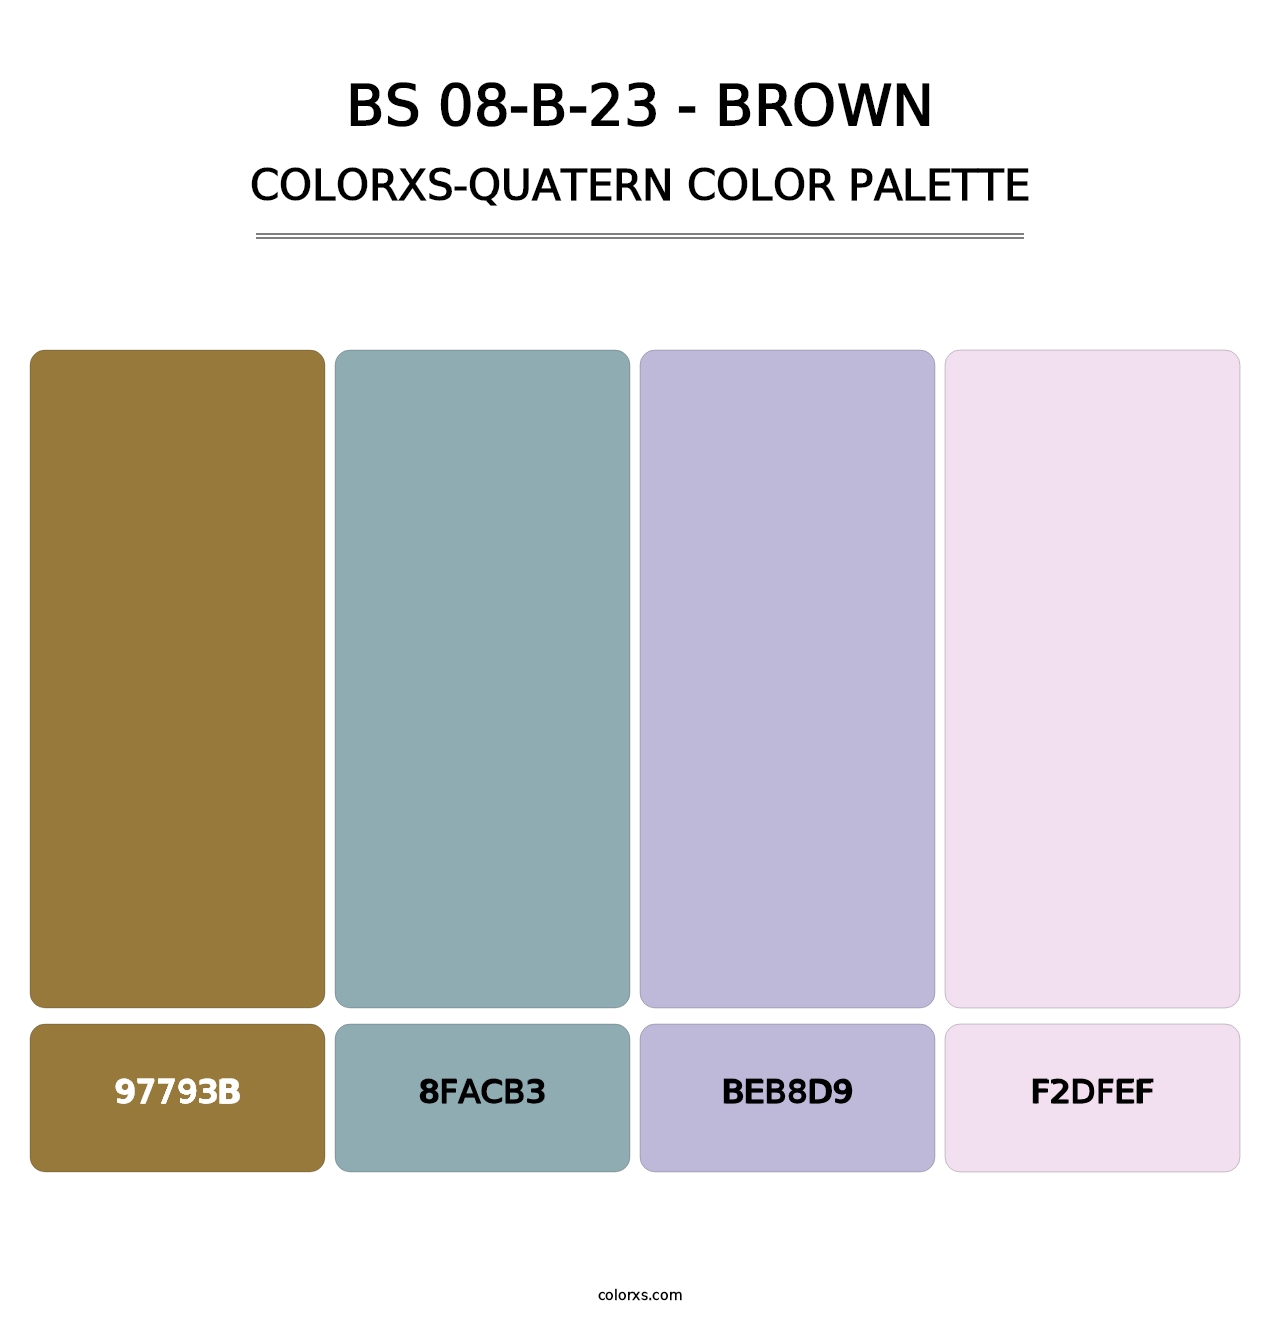 BS 08-B-23 - Brown - Colorxs Quatern Palette